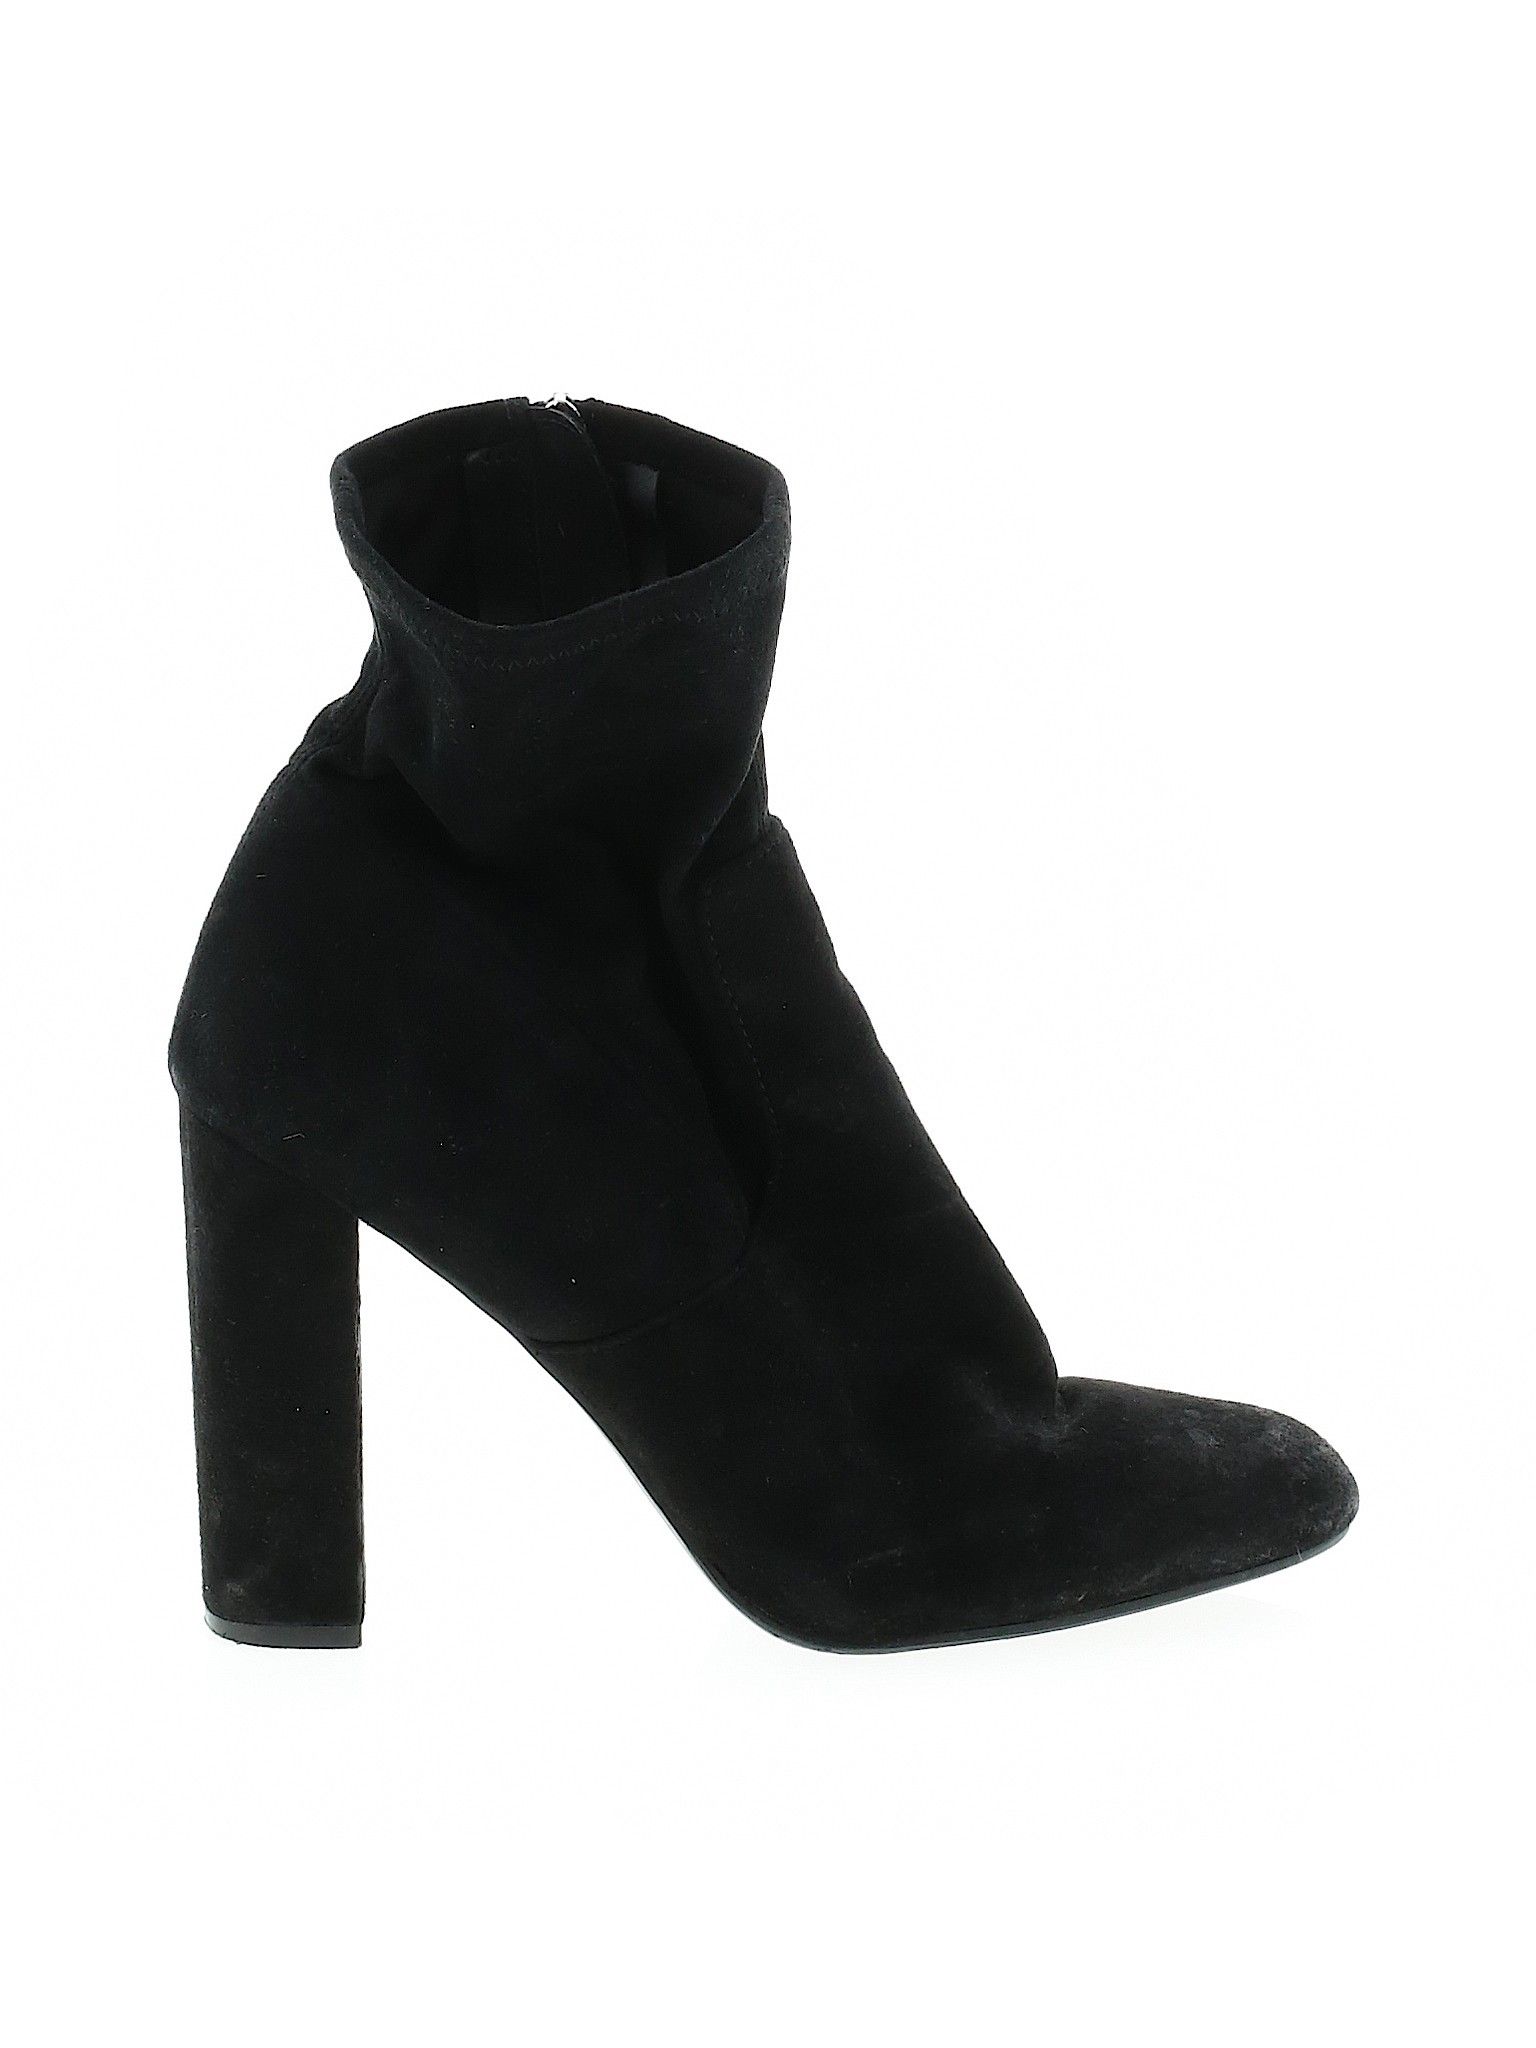 Steve Madden Ankle Boots Size 10: Black Women's Shoes - 56135062 | thredUP